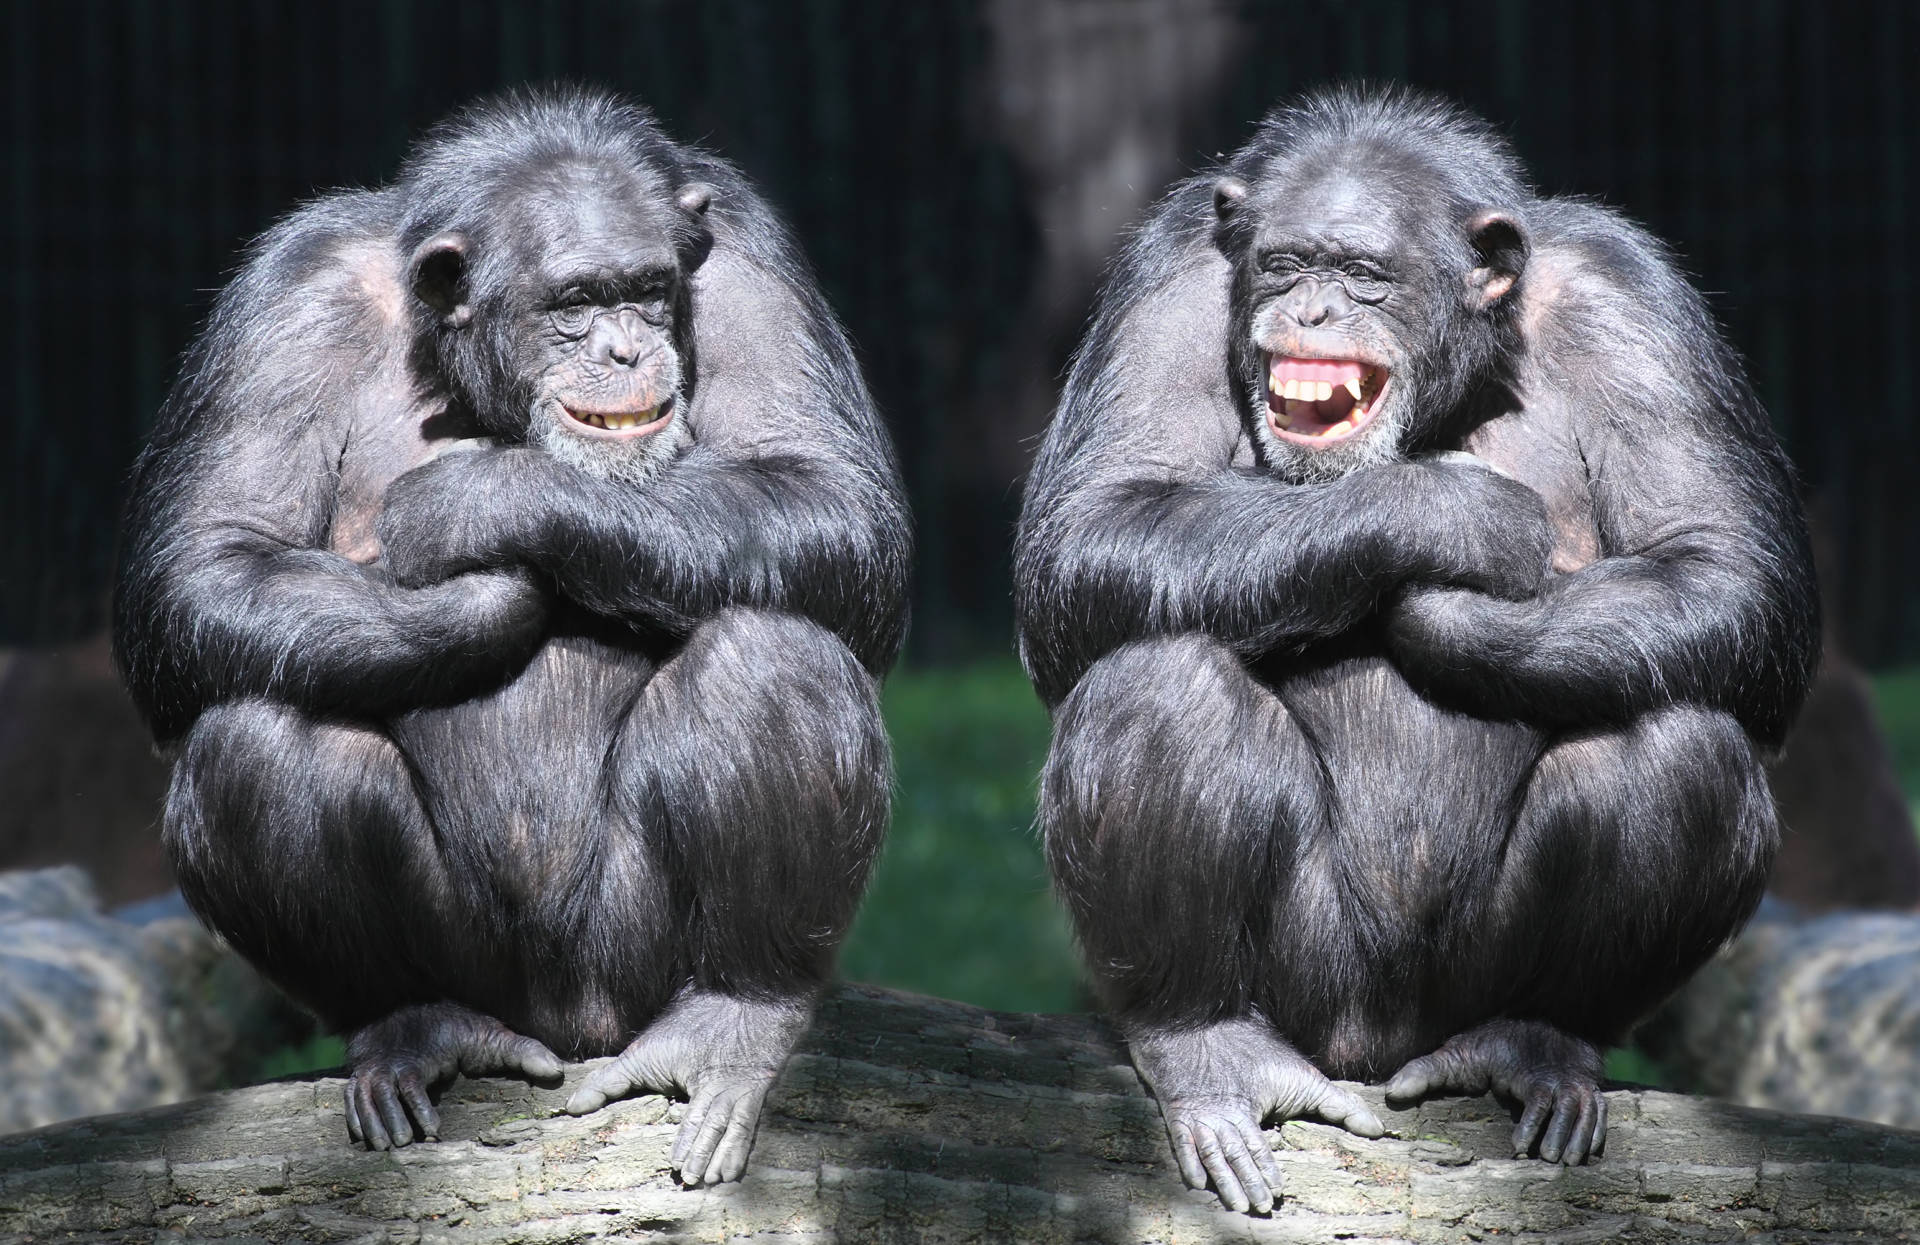 Stock image of two chimpanzees.